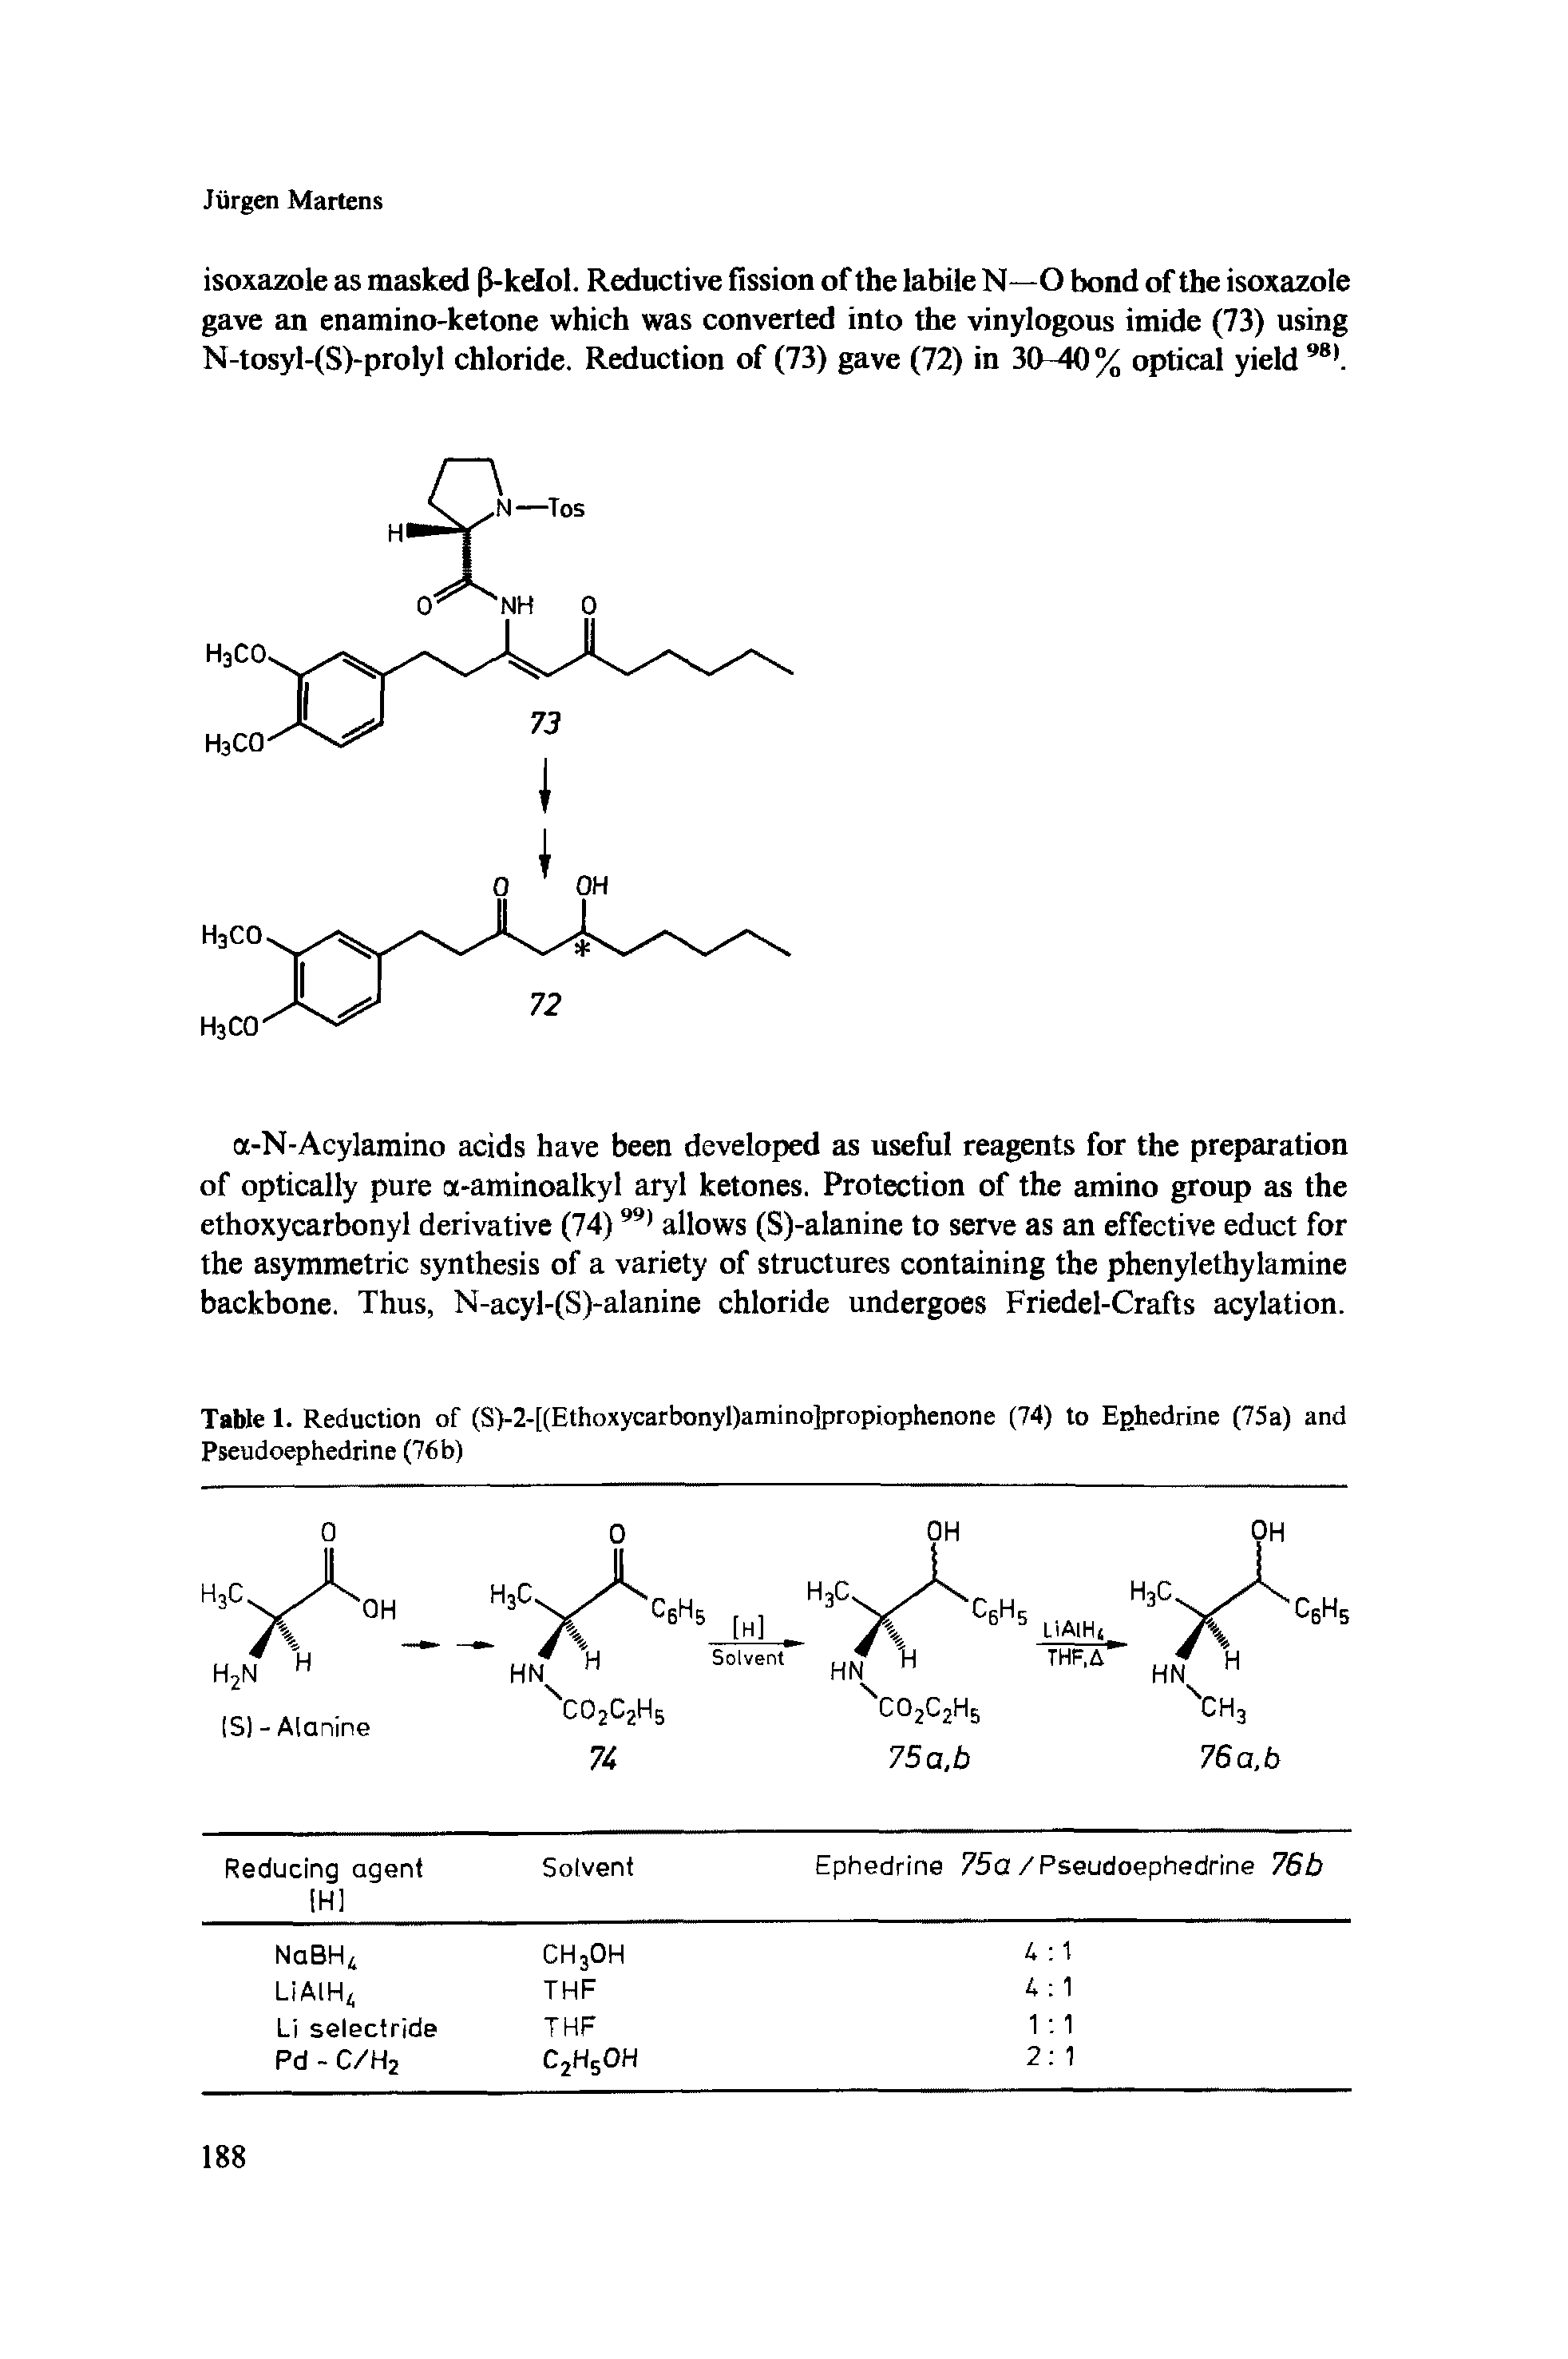 Table 1. Reduction of (S)-2-[(Ethoxycarbonyl)amino]propiophenone (74) to Ephedrine (75a) and Pseudoephedrine (76 b)...